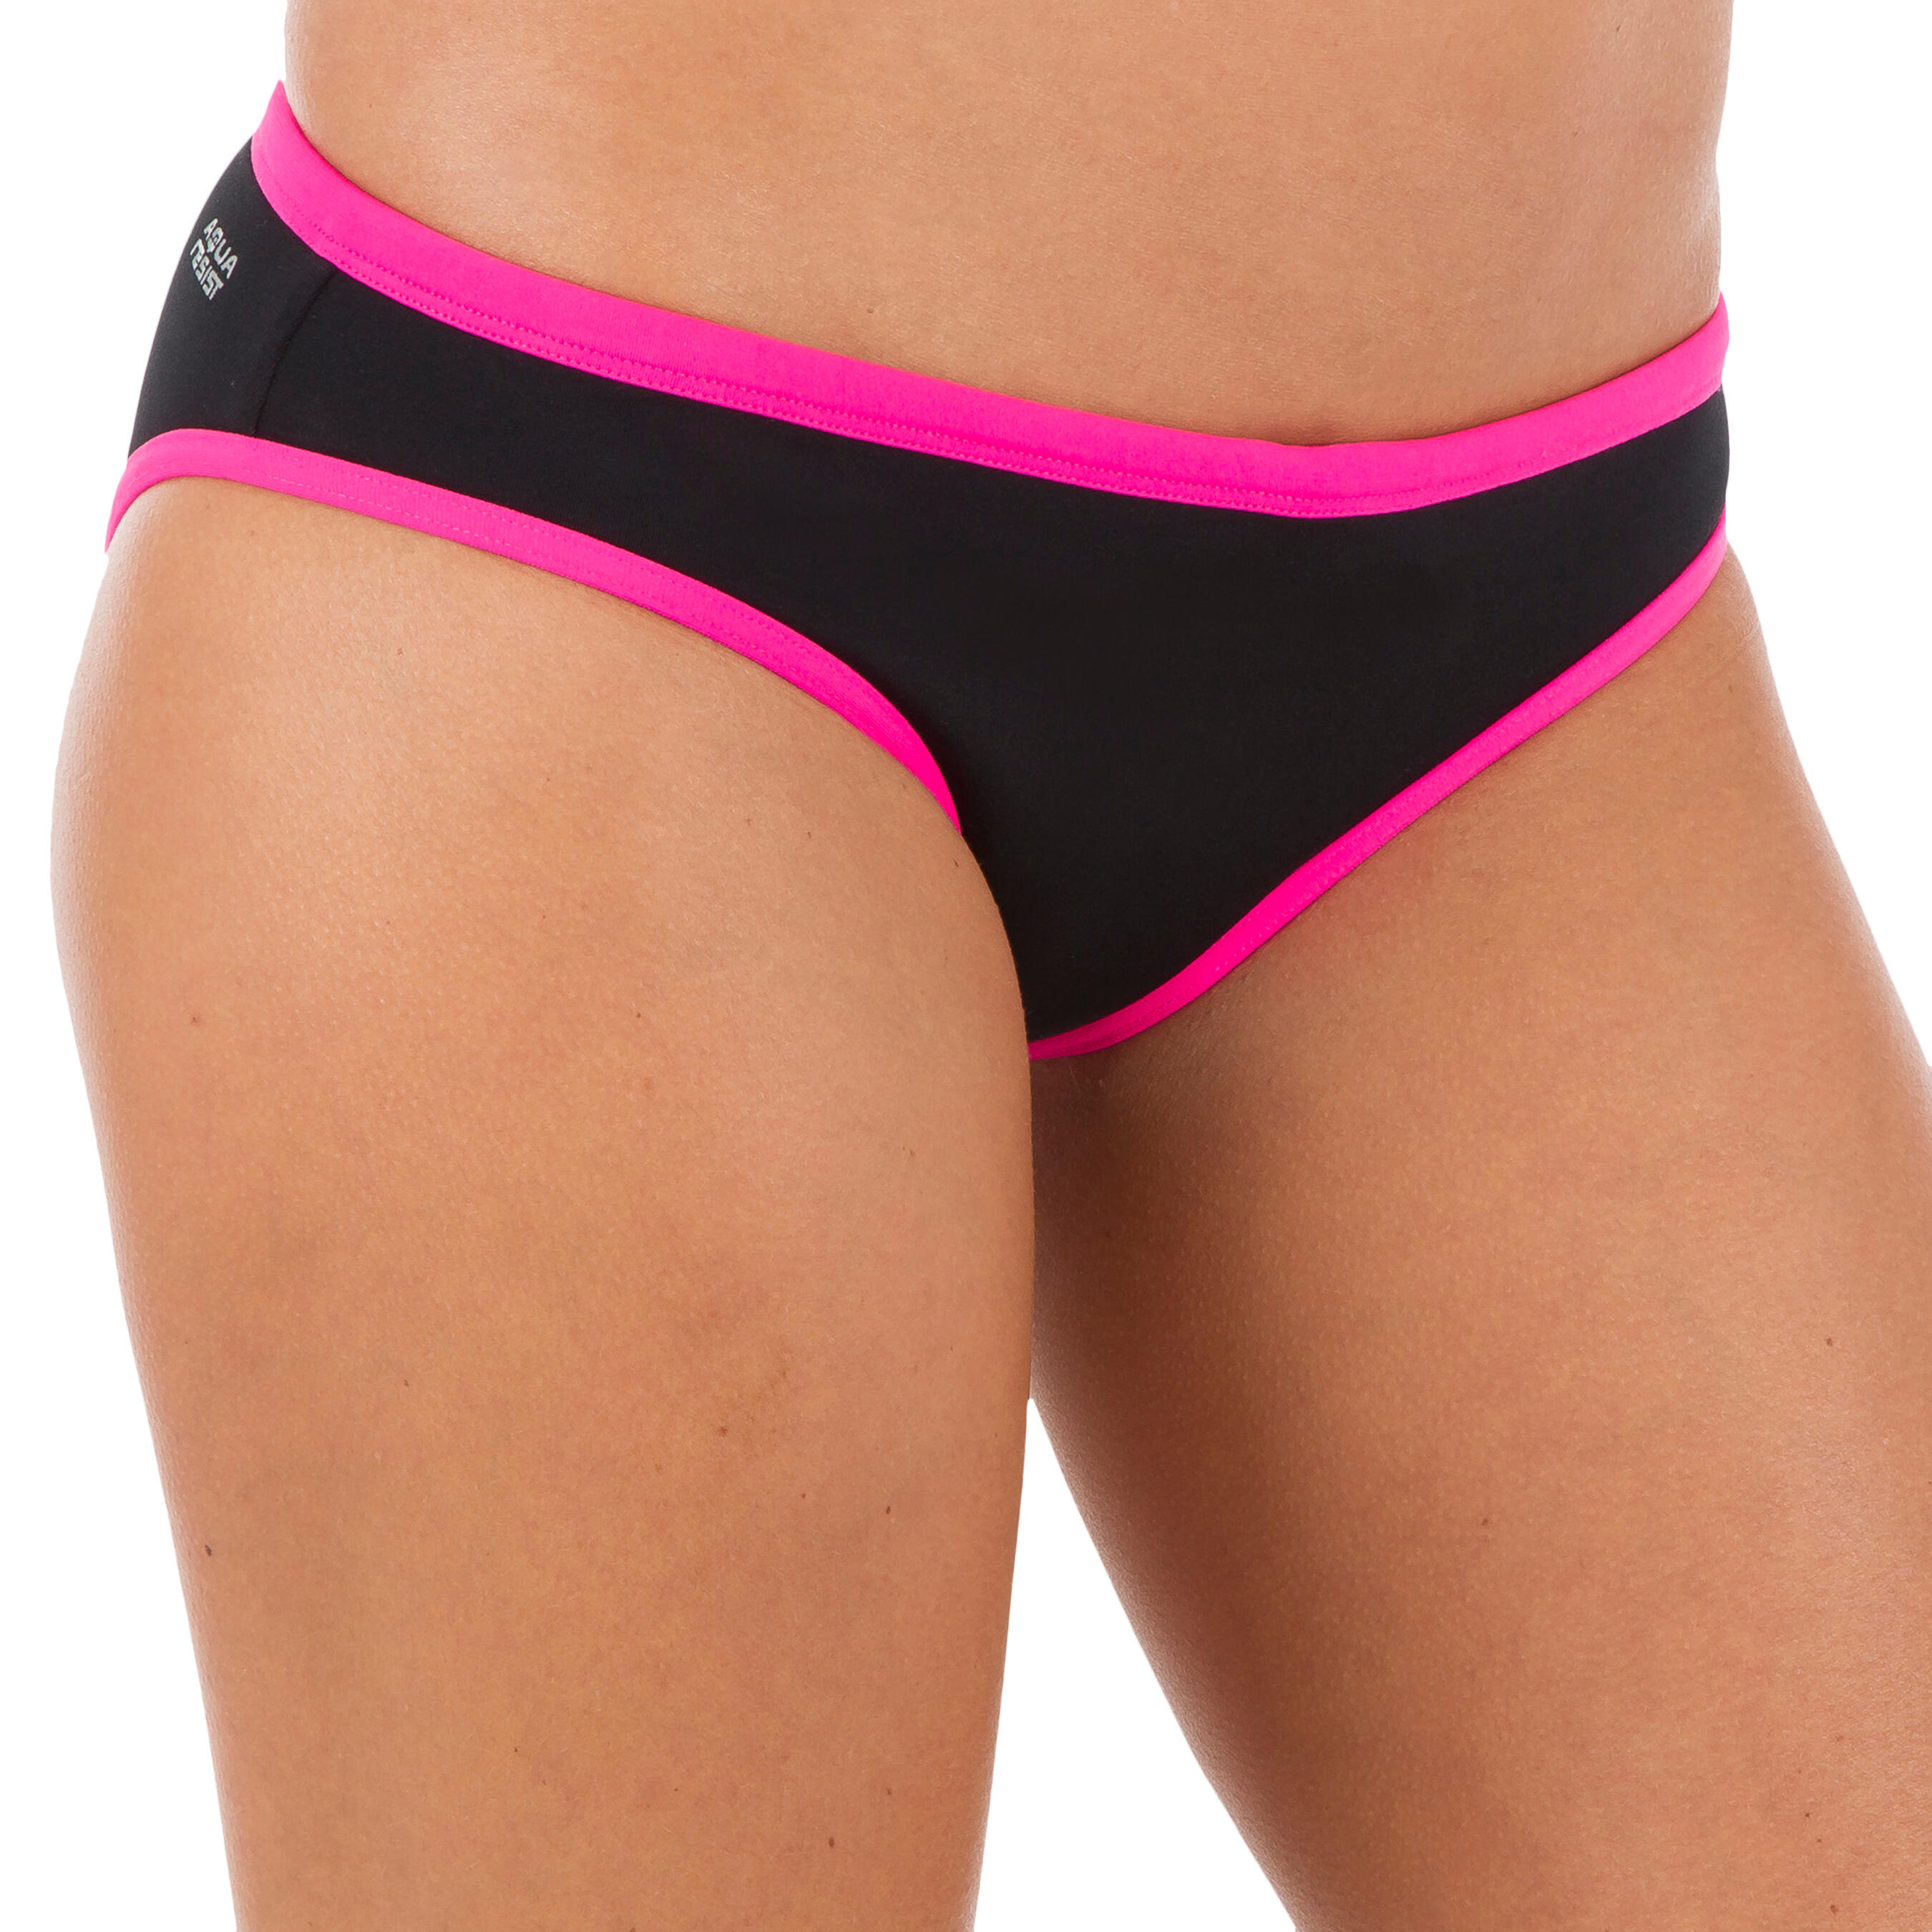 Jade Women's Chlorine Resistant Swimsuit Bottoms - Black/Pink 1/6